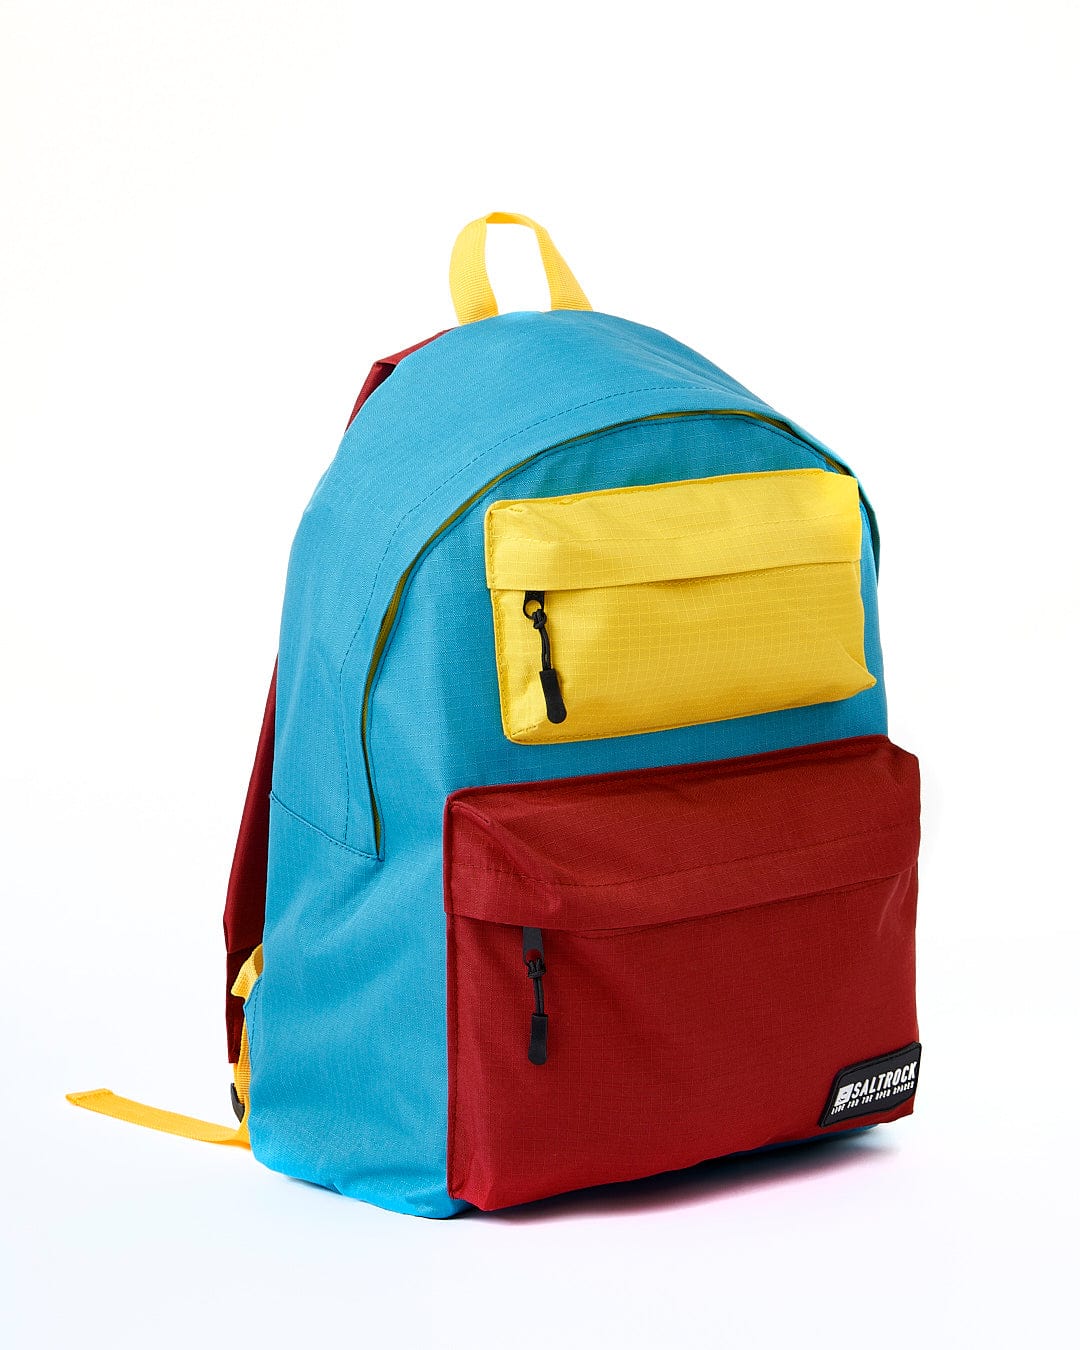 Uni-Block - Backpack - Turquoise